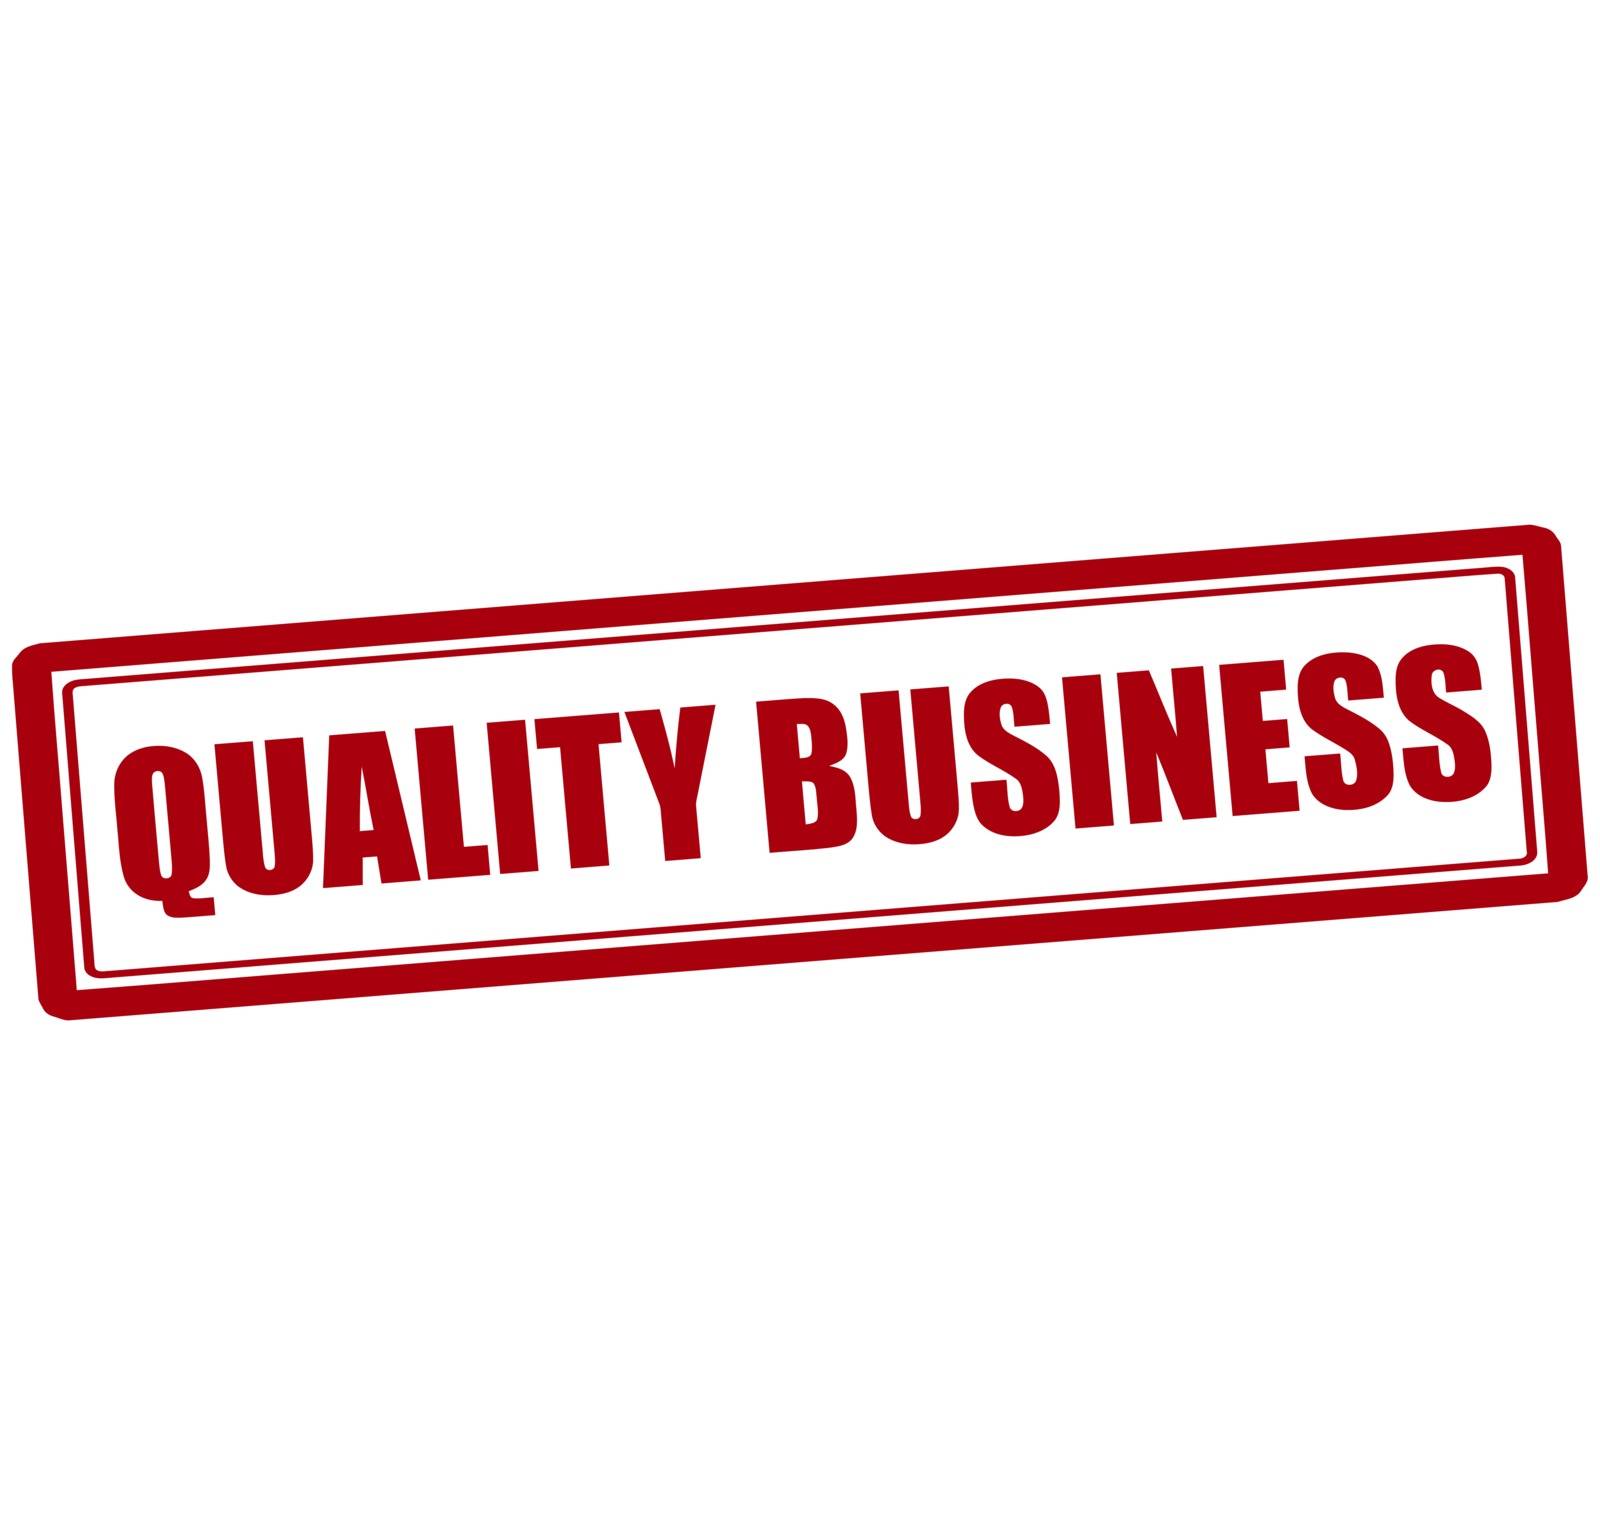 Quality business by carmenbobo